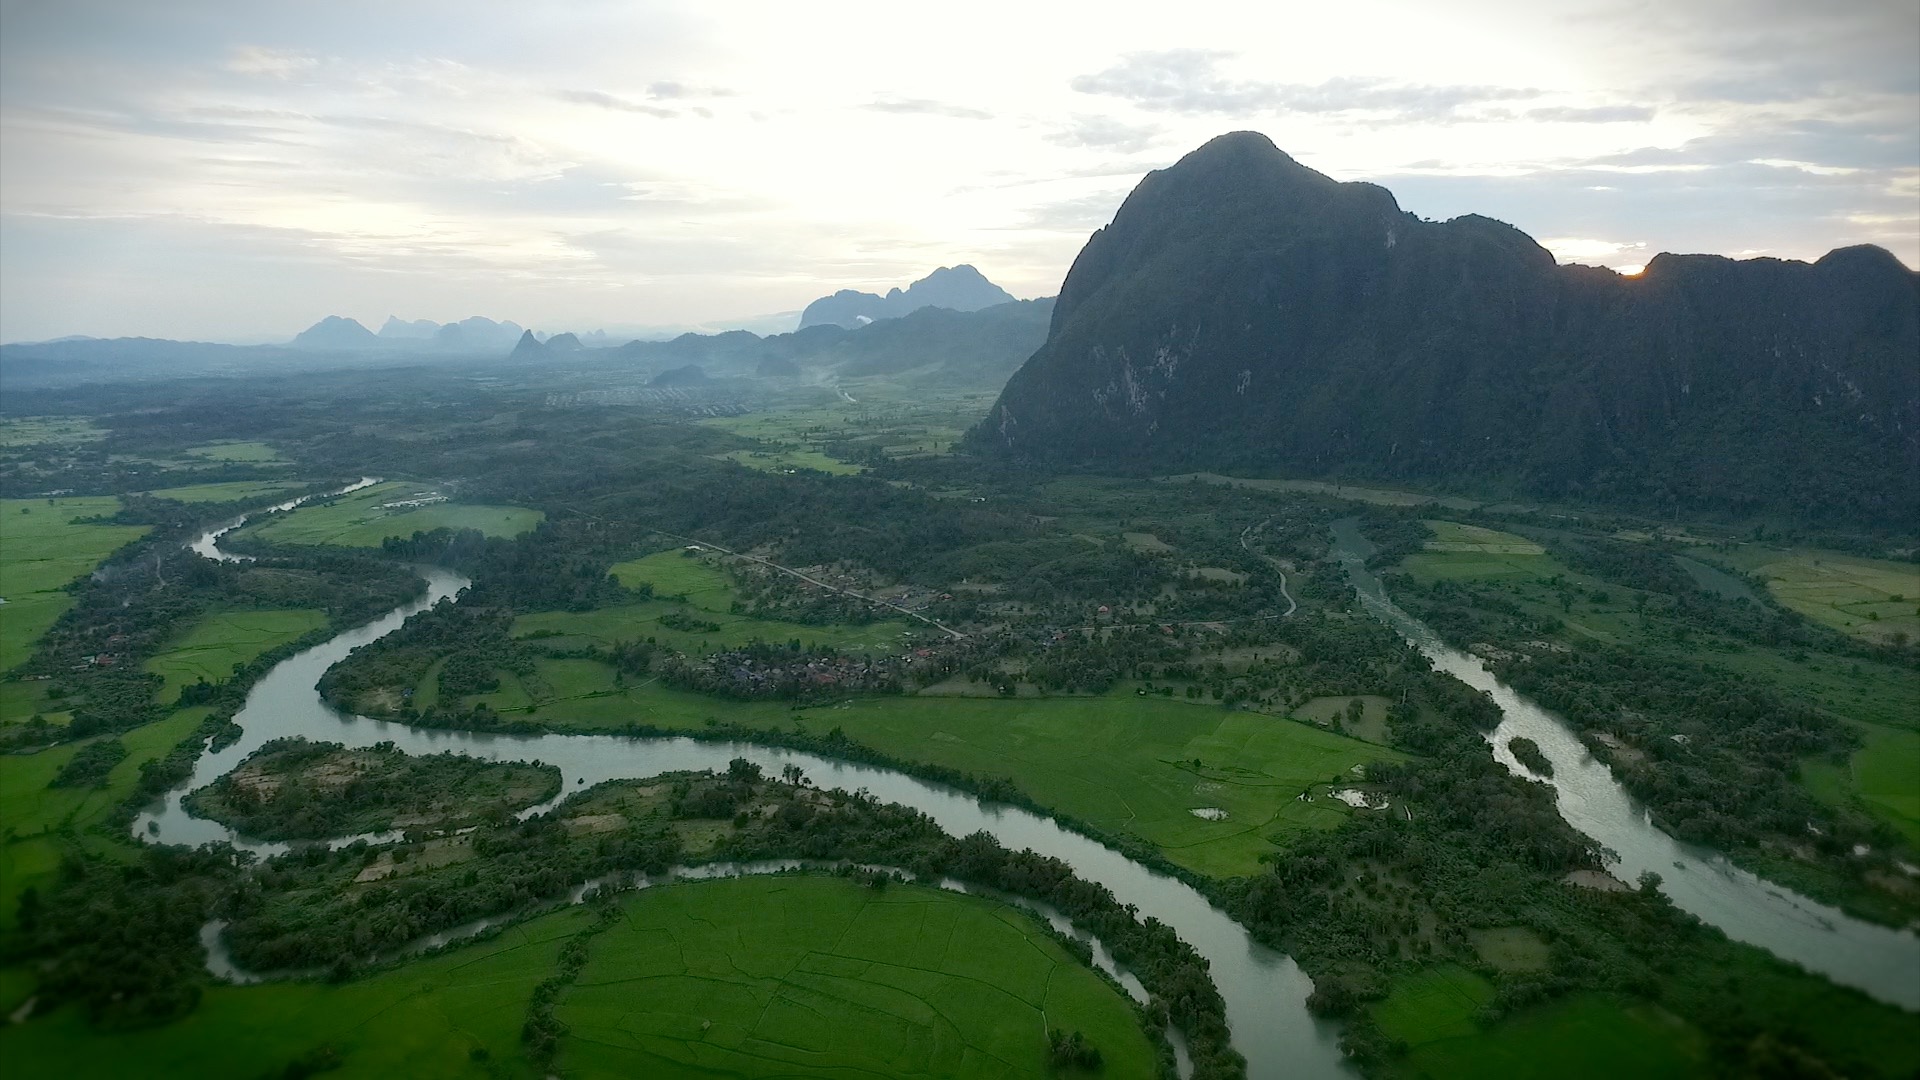 Mekong - A River Rising